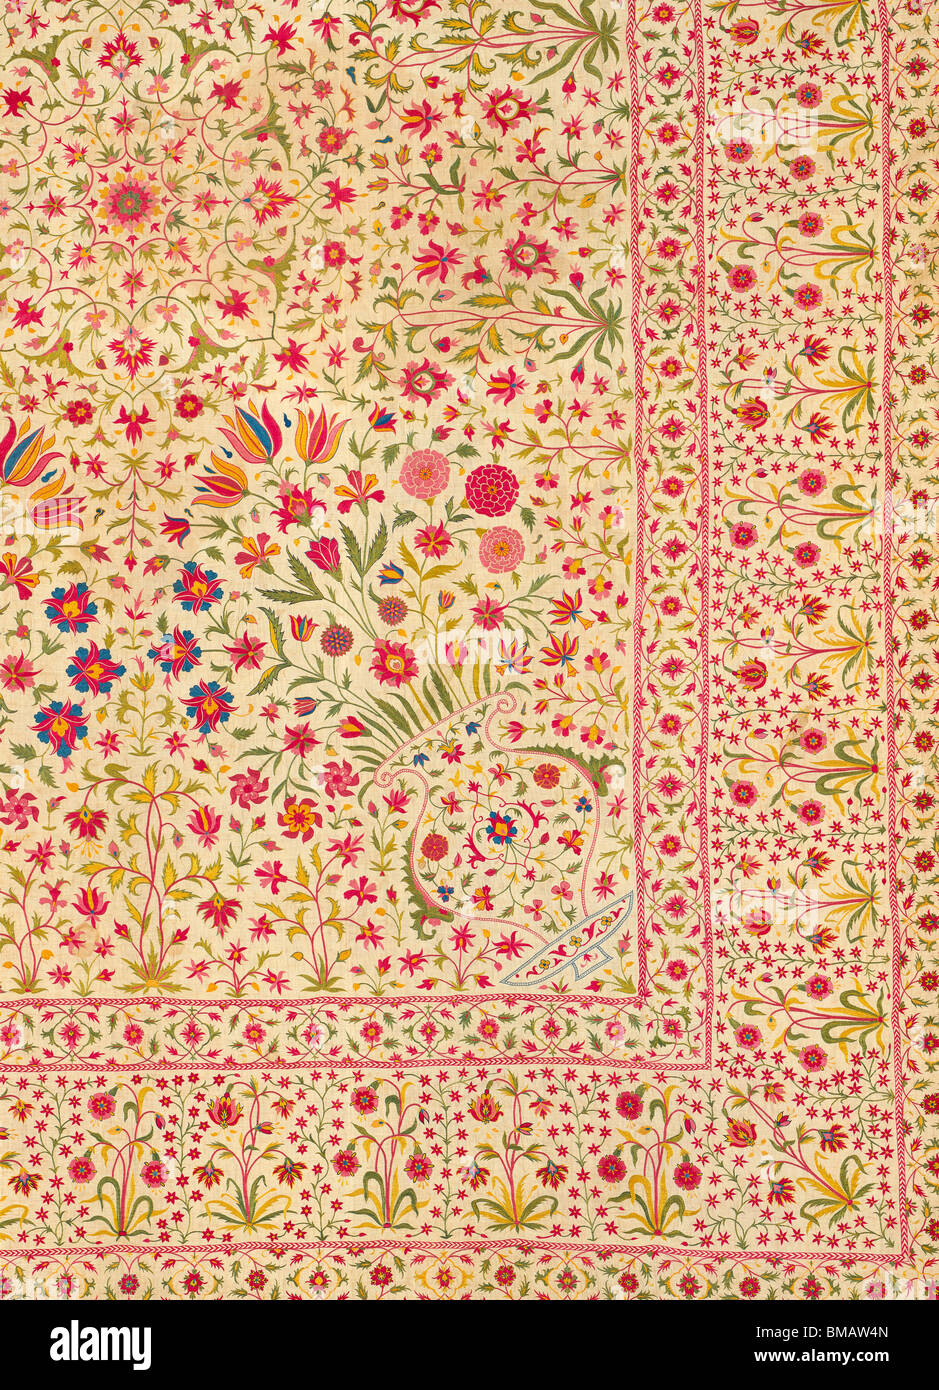 Floorspread, detail. India, 18th century Stock Photo